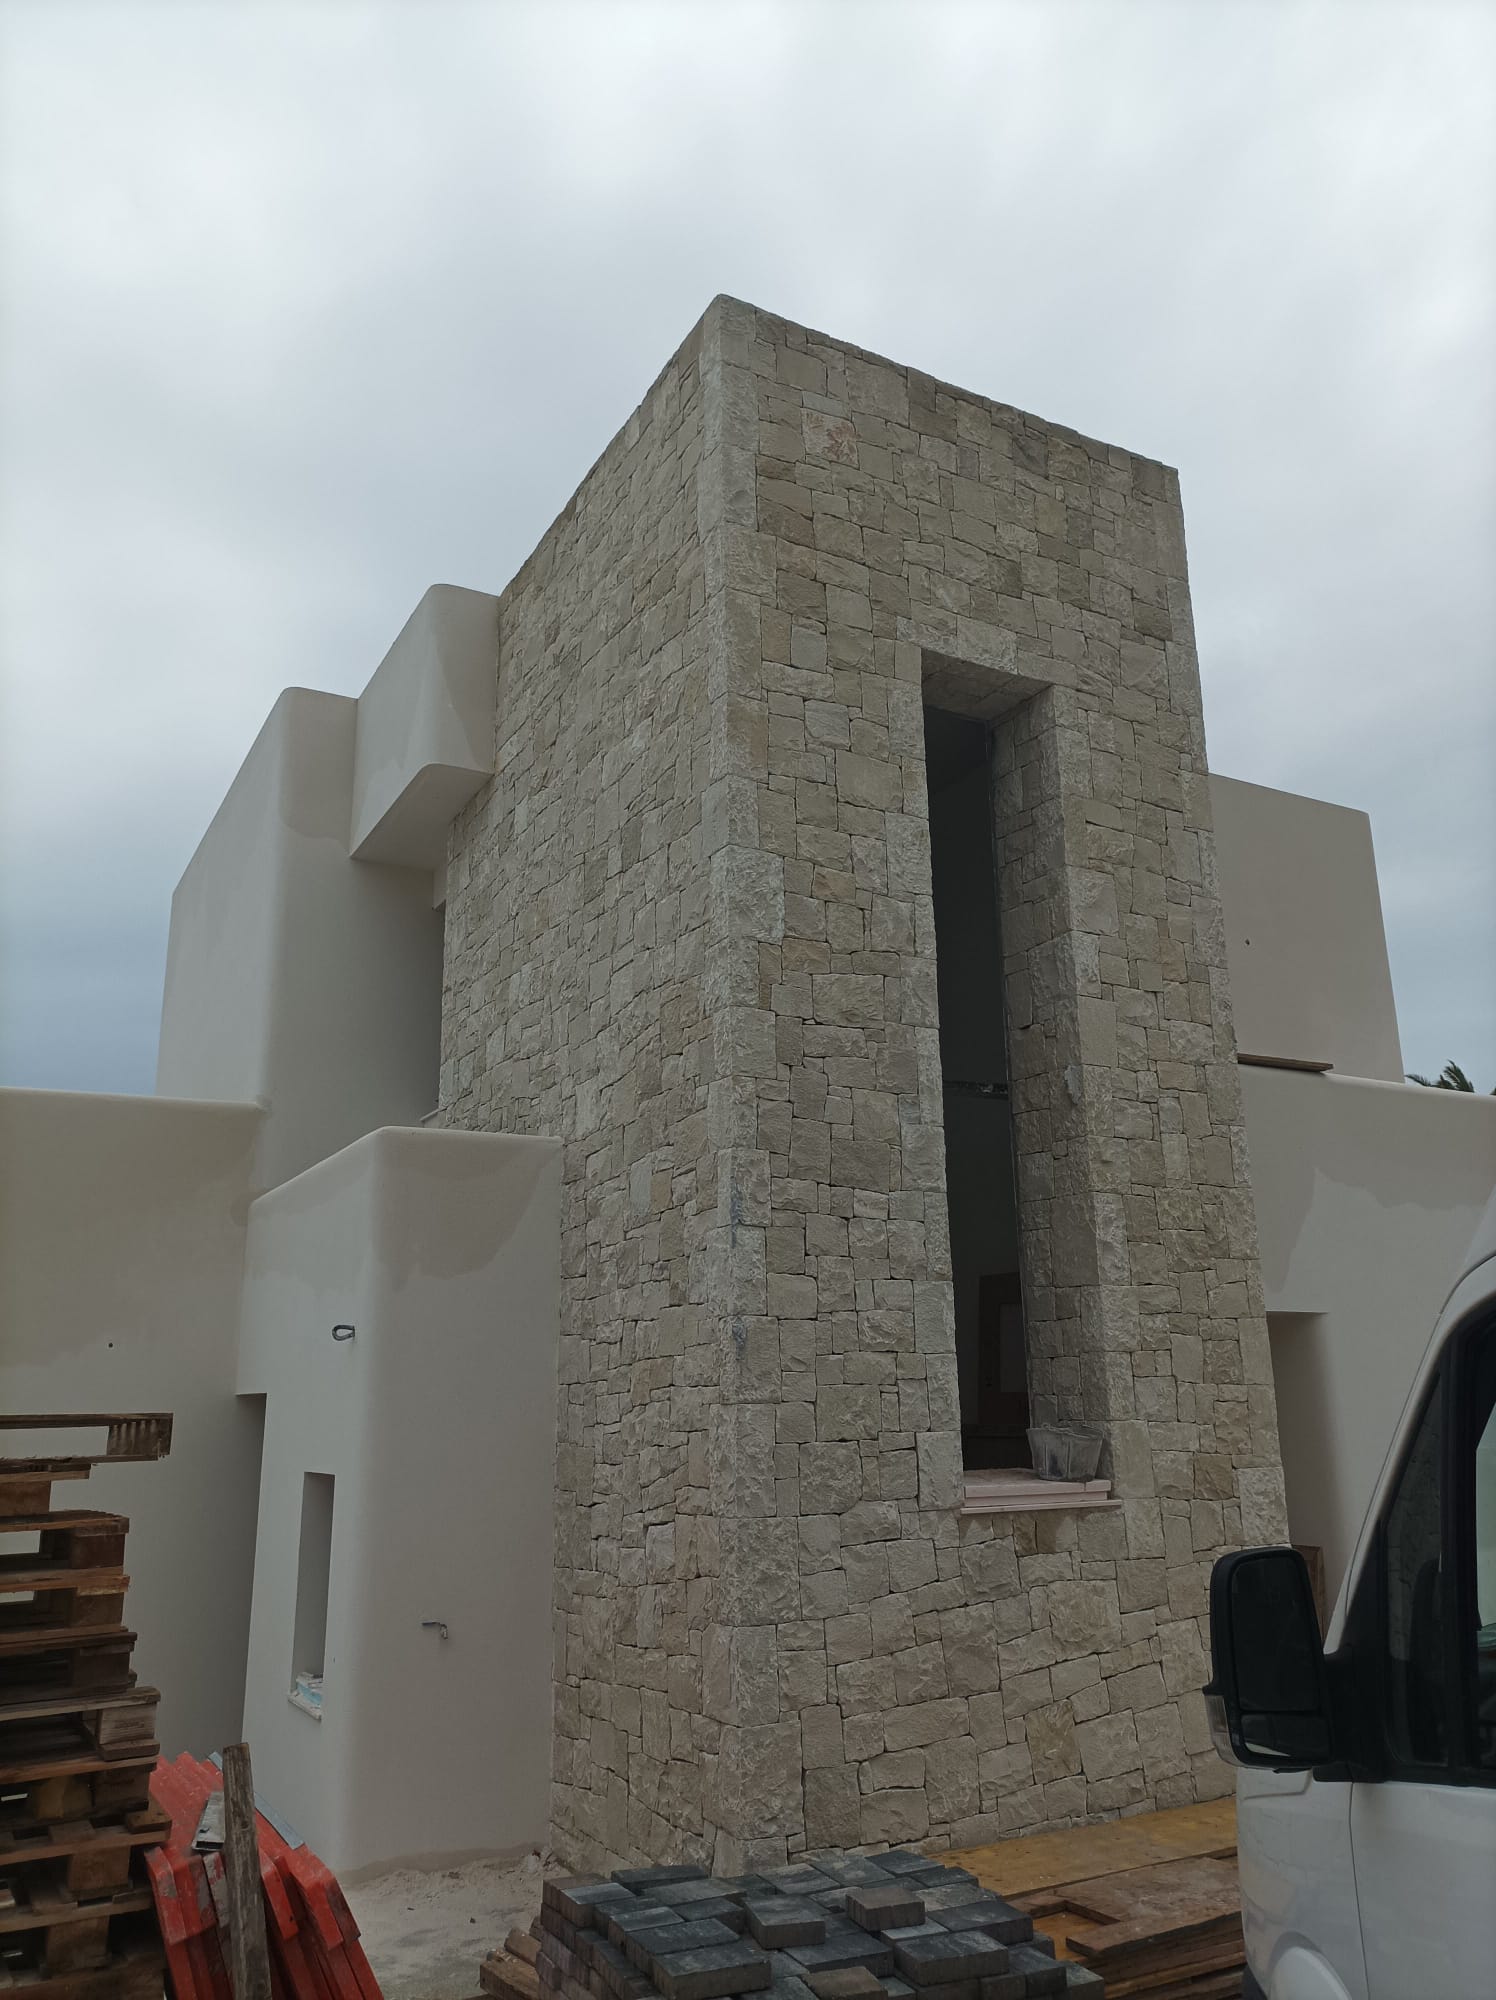 Nieuwbouw villa in Ibiza-stijl te koop in Baladrar Benissa, Costa Blanca